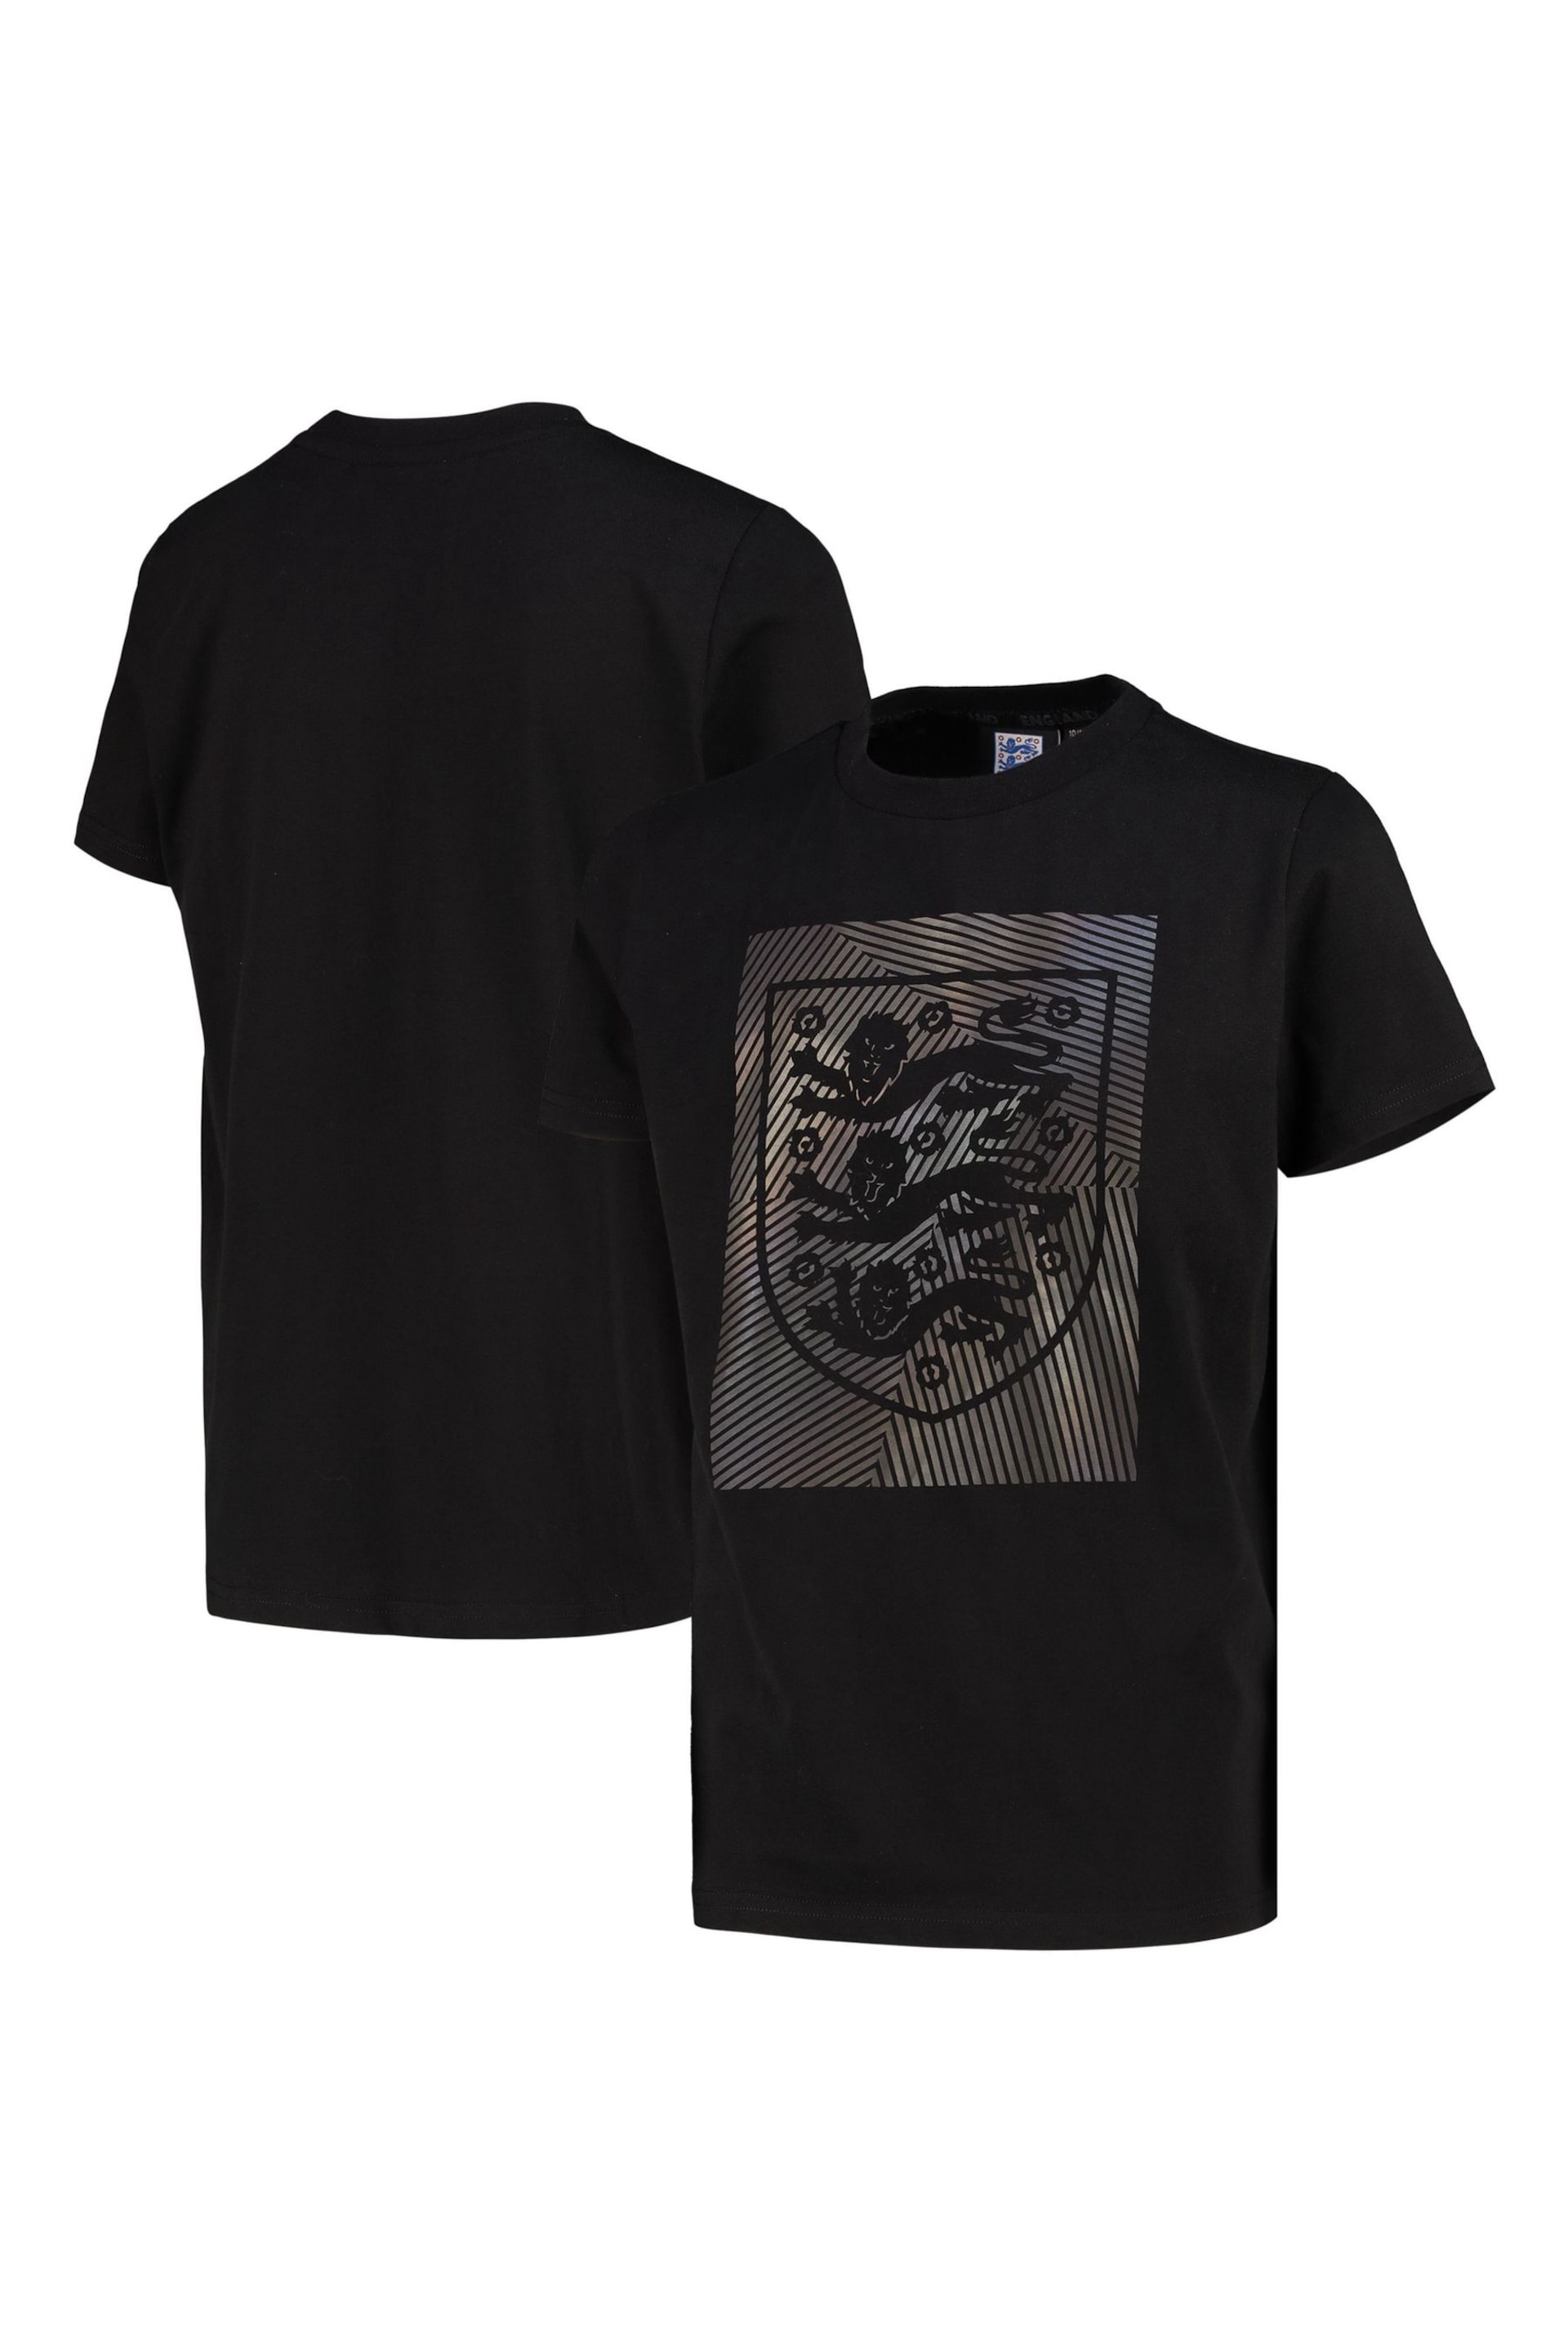 adidas Black England Tonal Reflective Graphic T-Shirt - Image 1 of 3